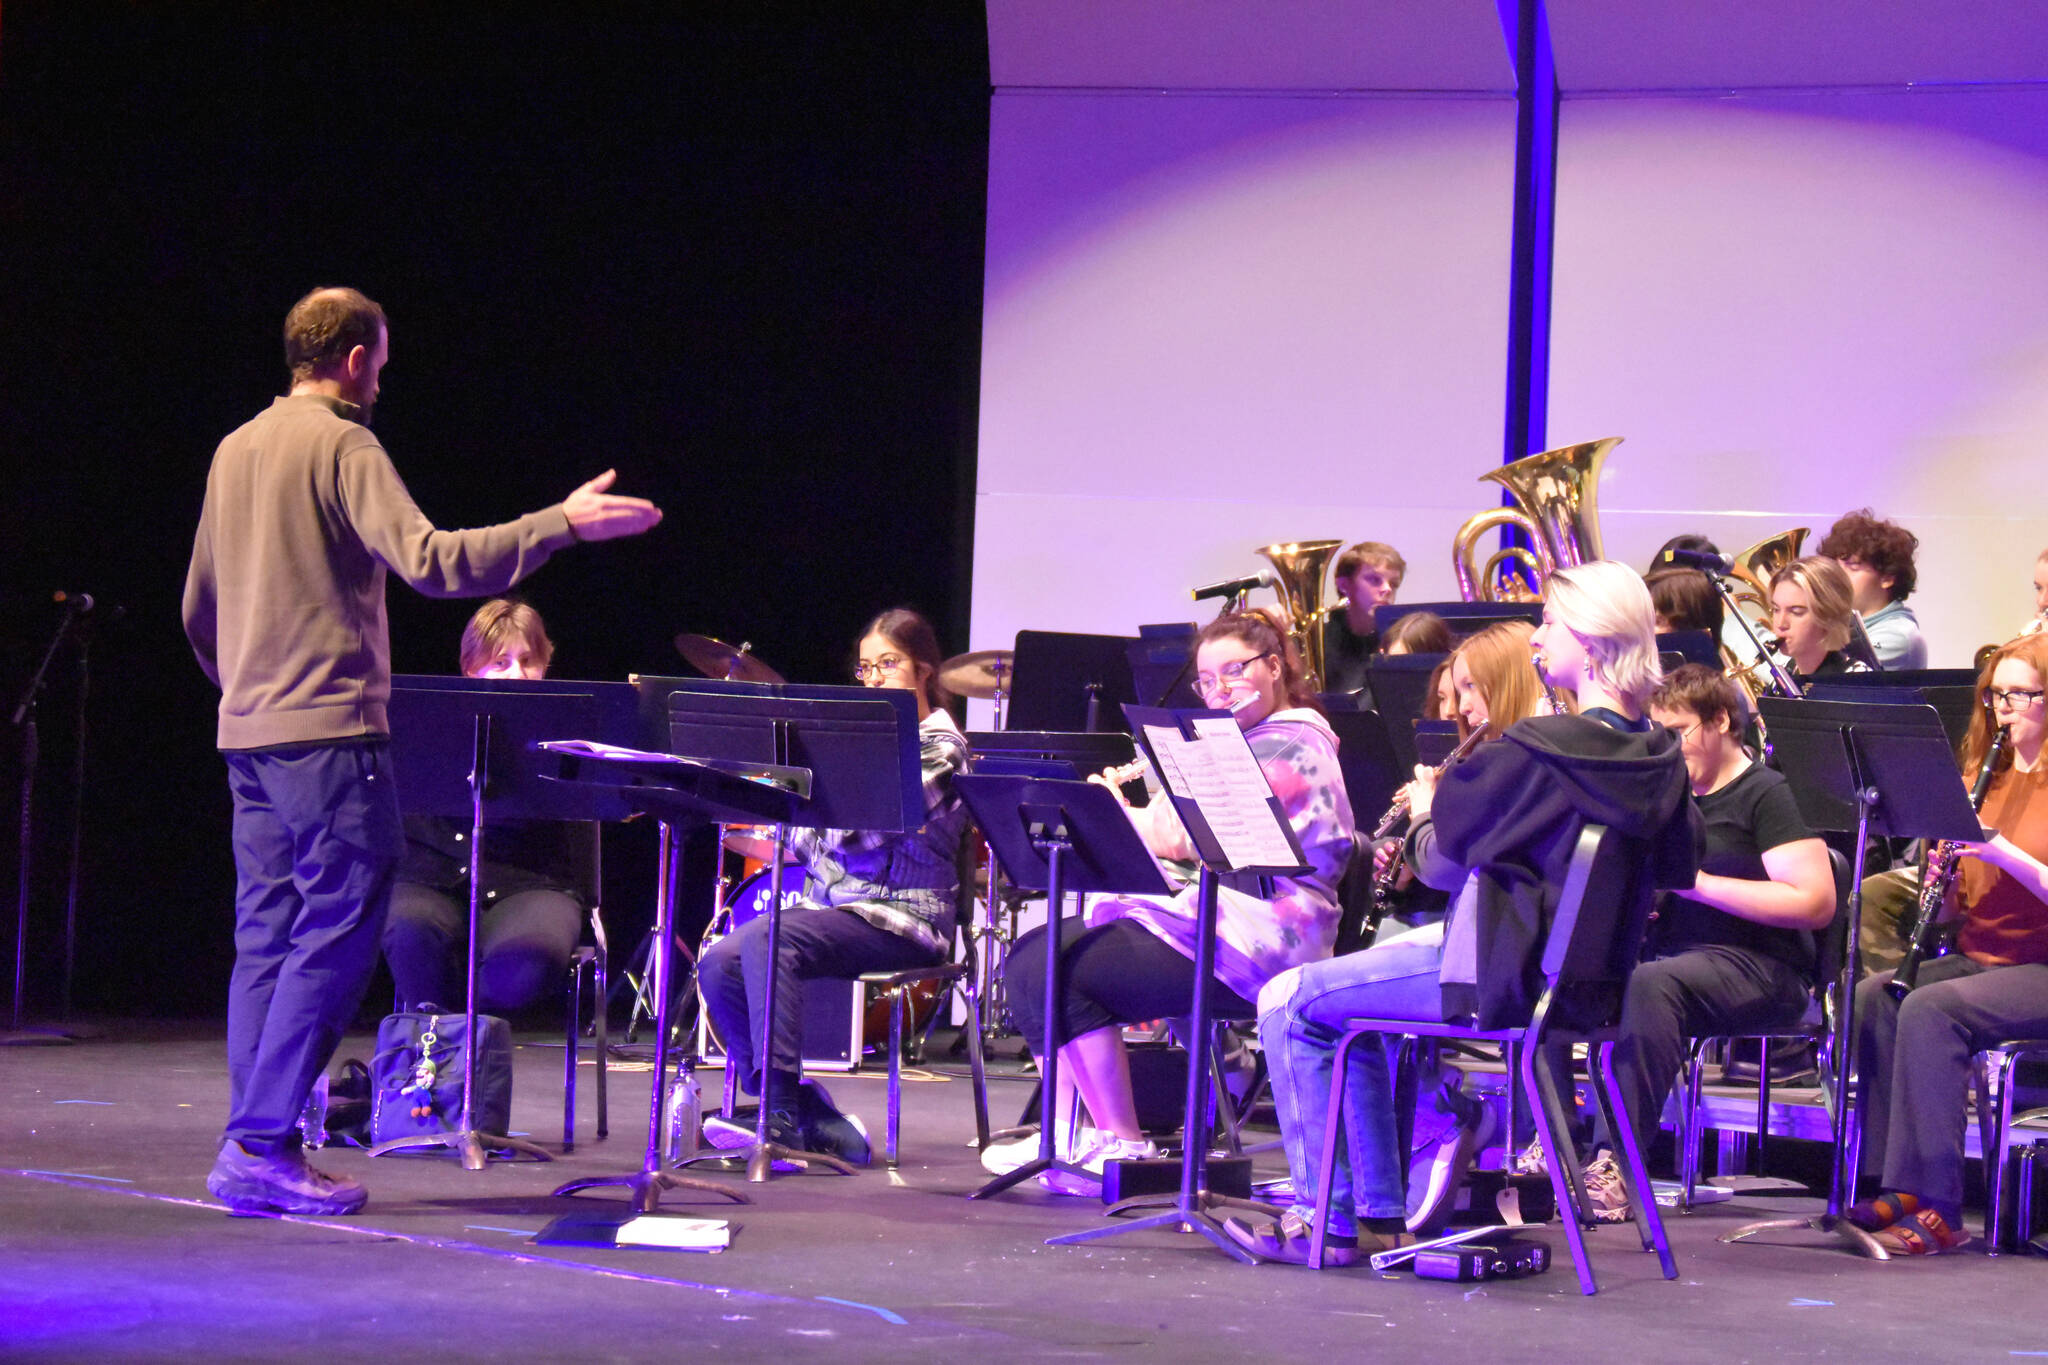 Mark Jurek directs the Soldotna High School Band at a rehersal on Oct. 11, 2022 at Soldotna High School in Soldotna Alaska. (Jake Dye/Peninsula Clarion)